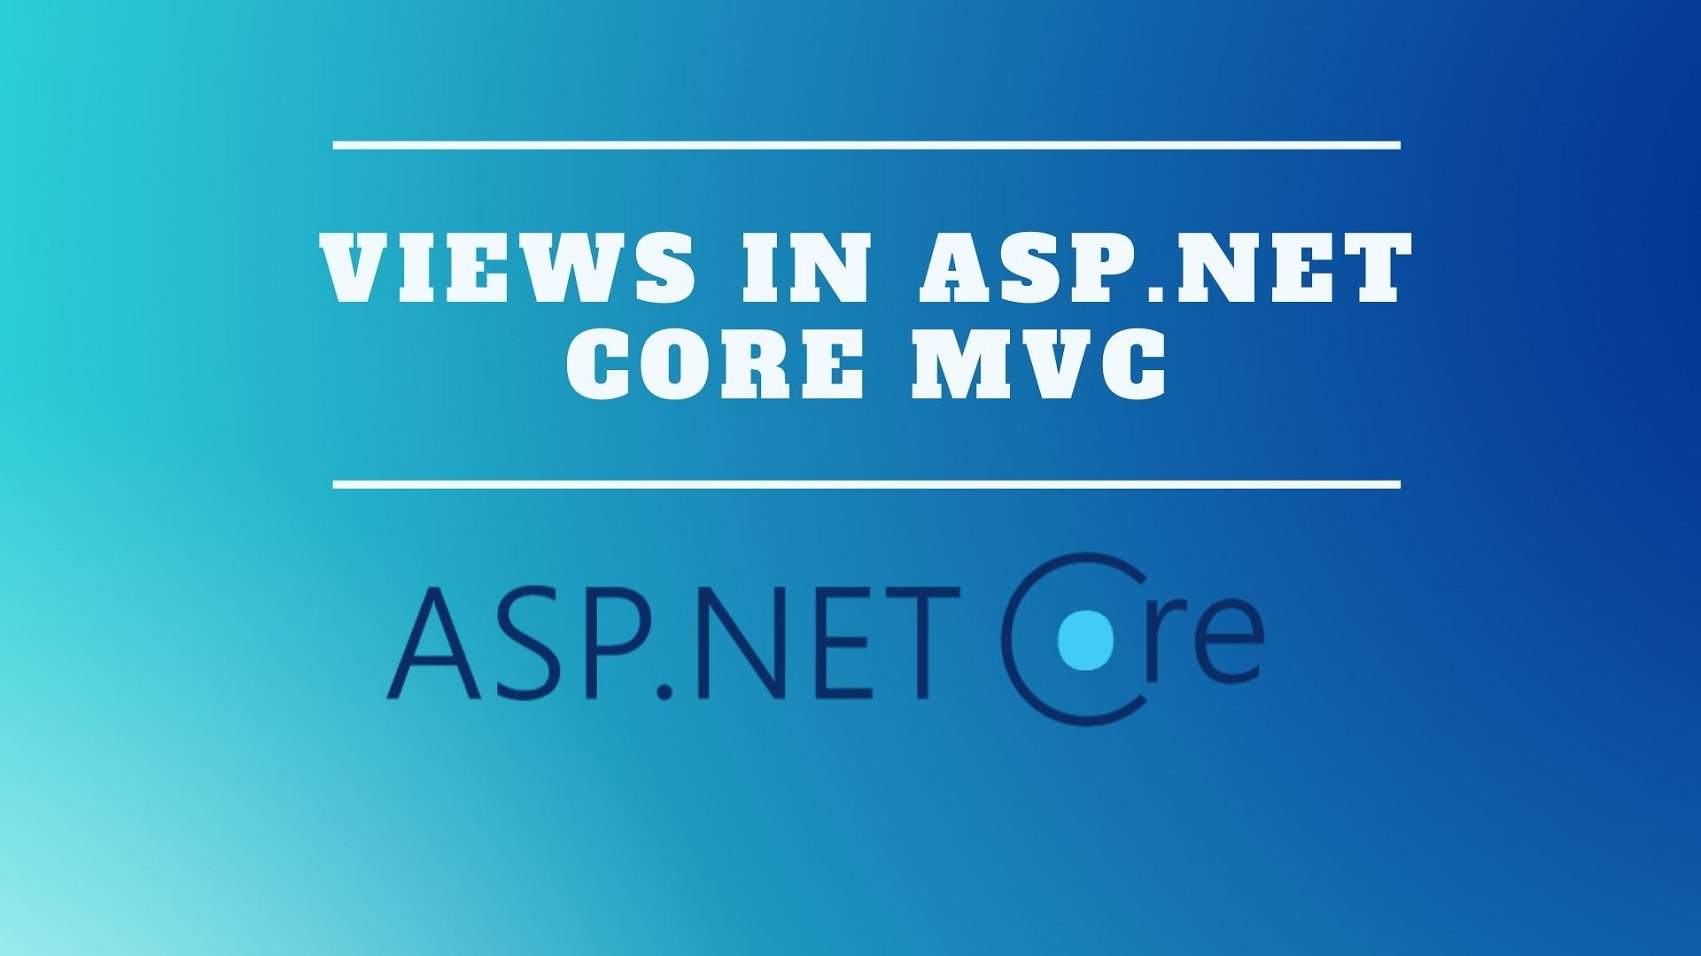 Views in ASP.NET Core MVC